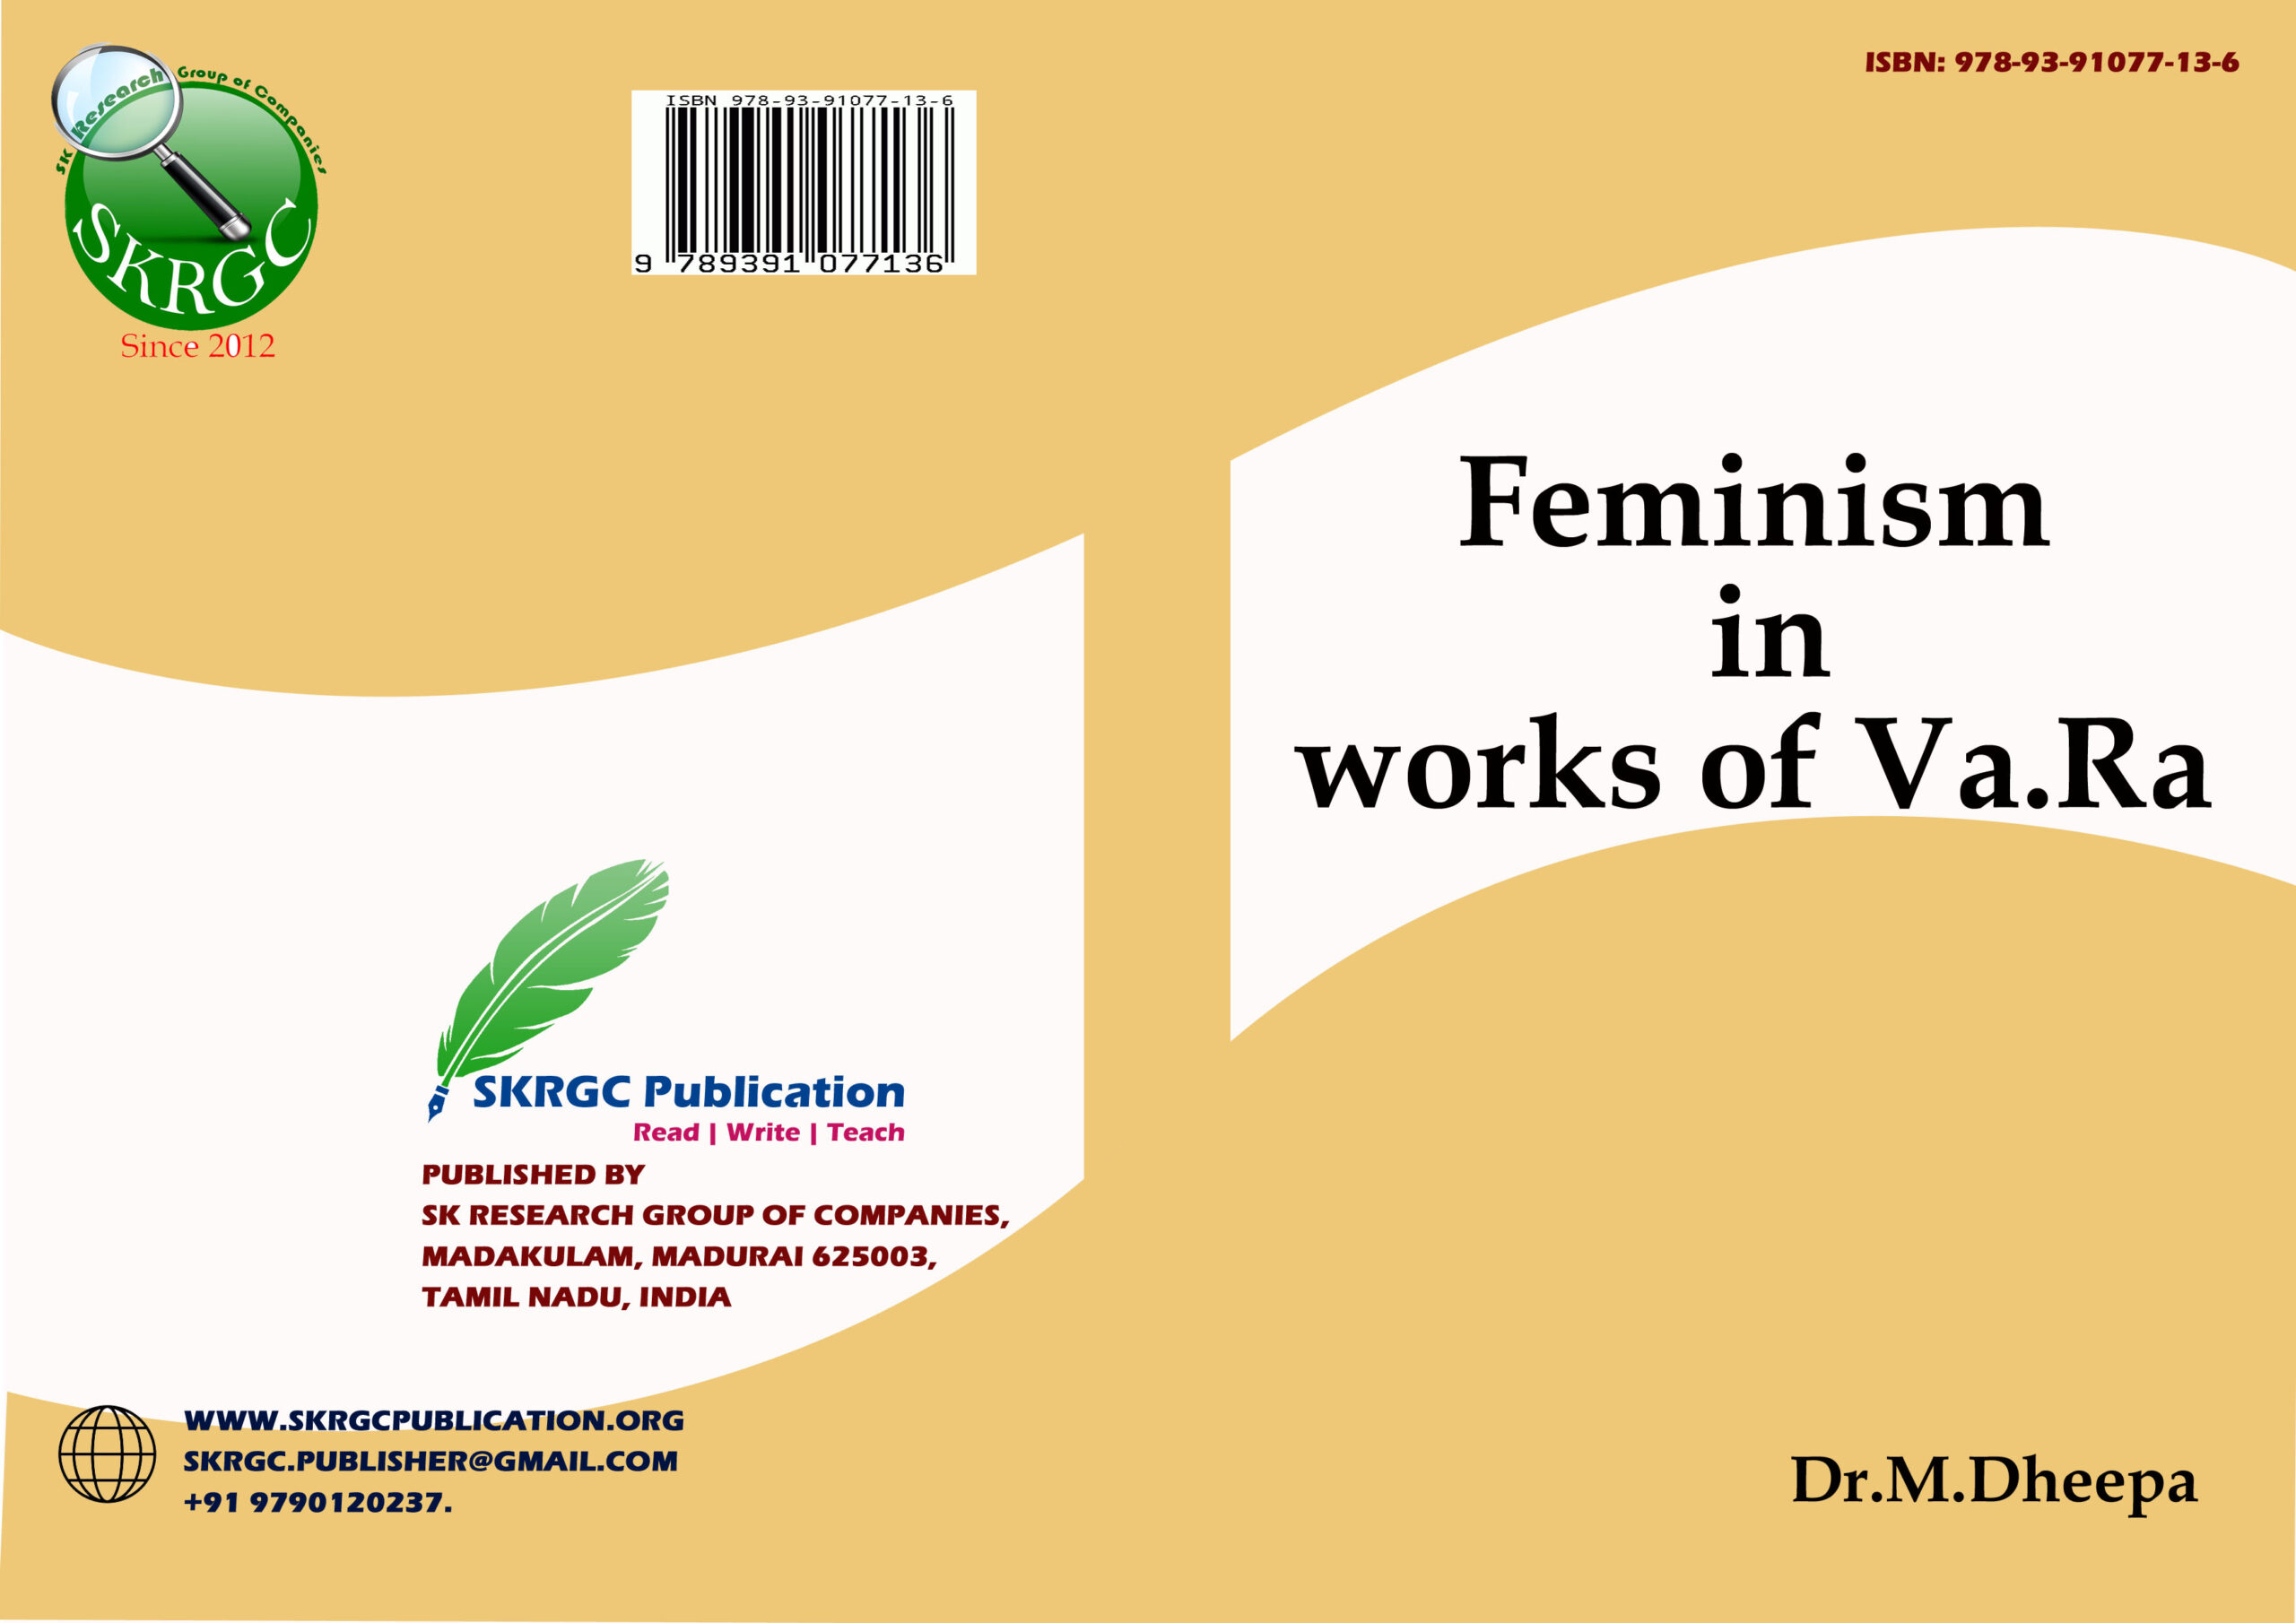 Feminism in works of Va.Ra